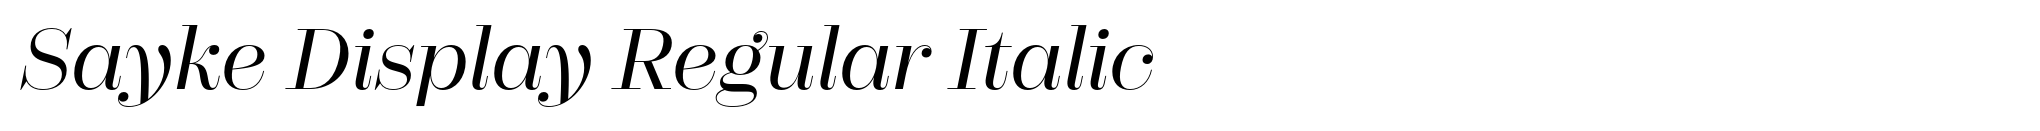 Sayke Display Regular Italic image